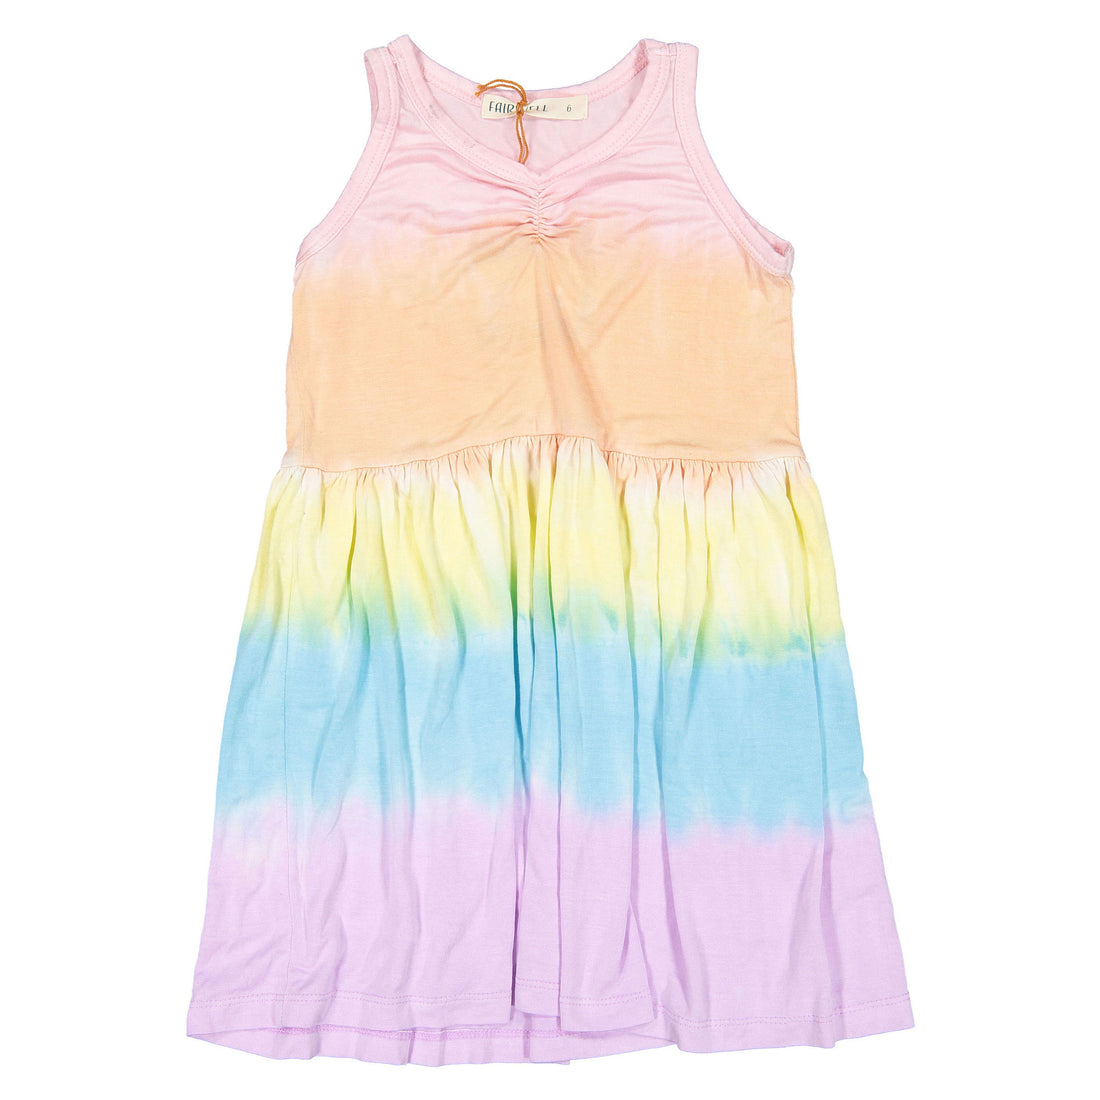 Fairwell Rainbow Shirred Casita Dress